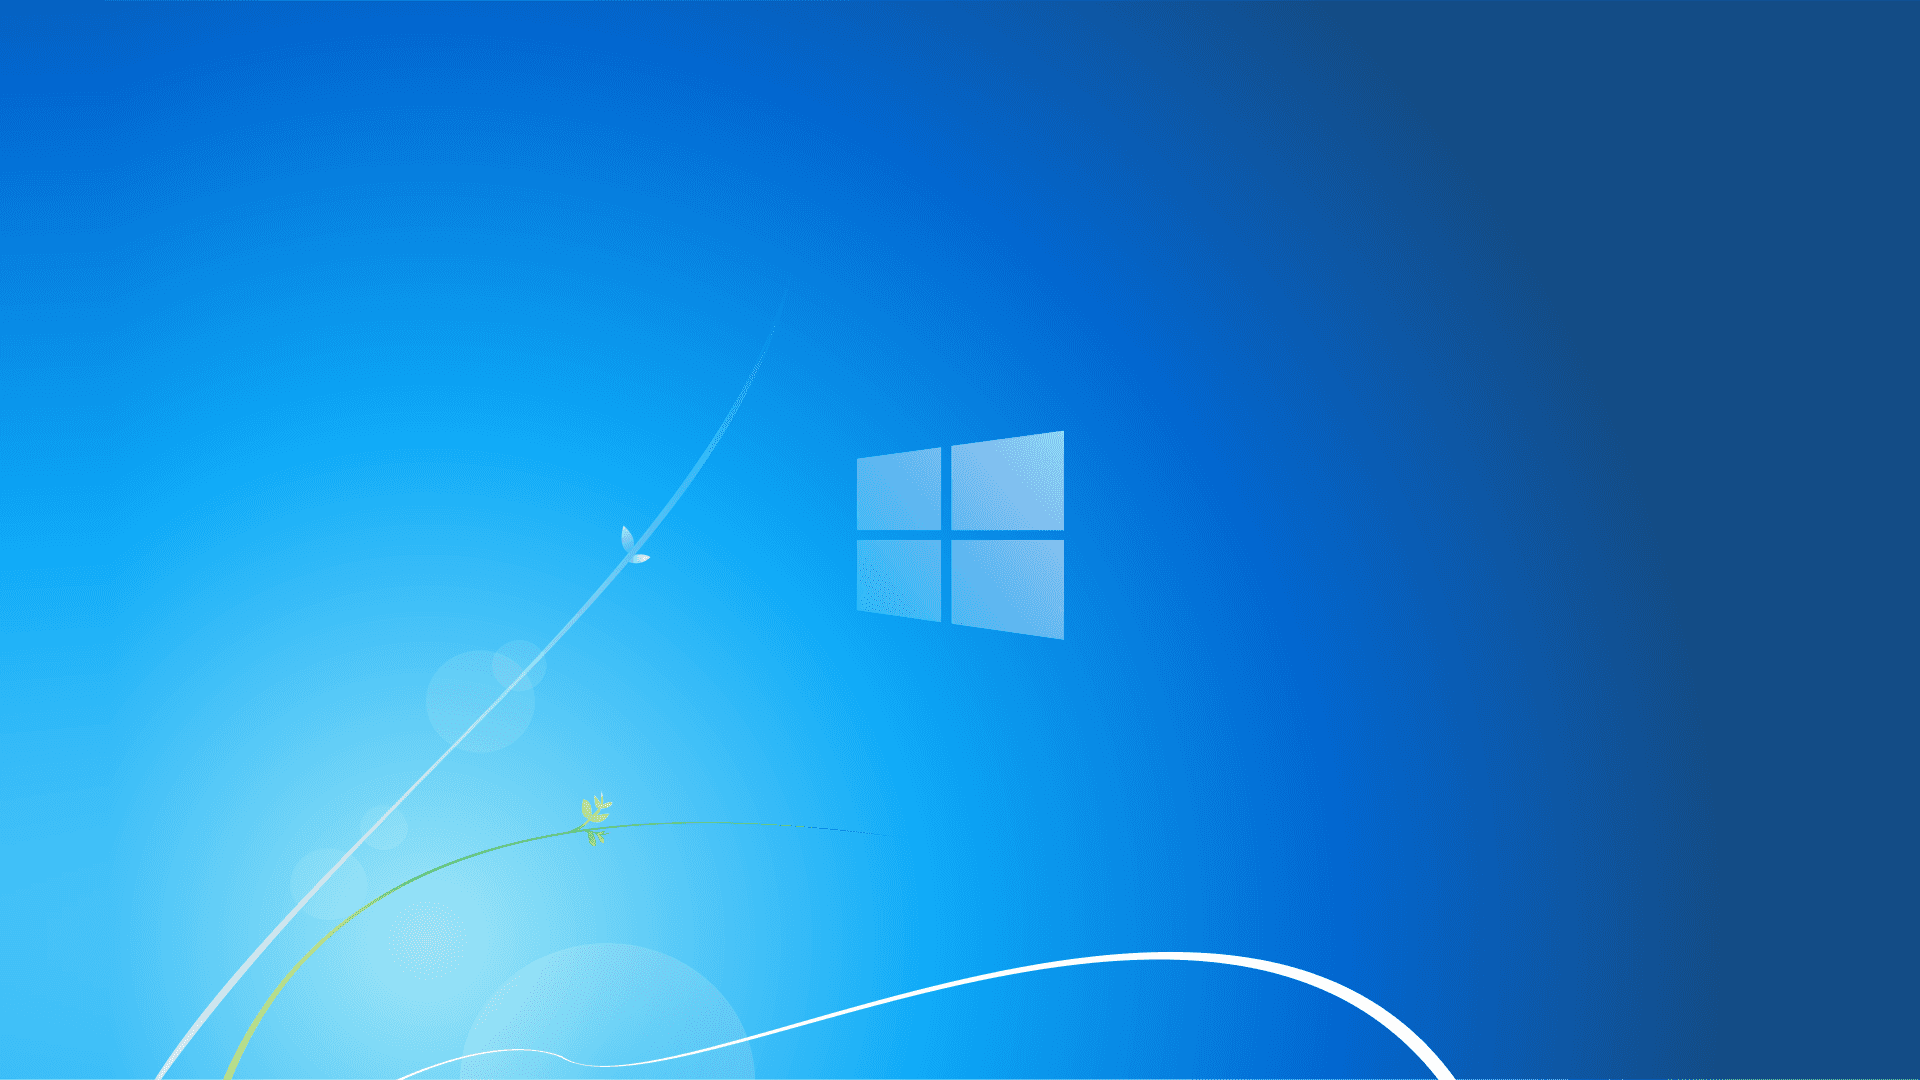 Enjoy the stunning visuals of Windows 7